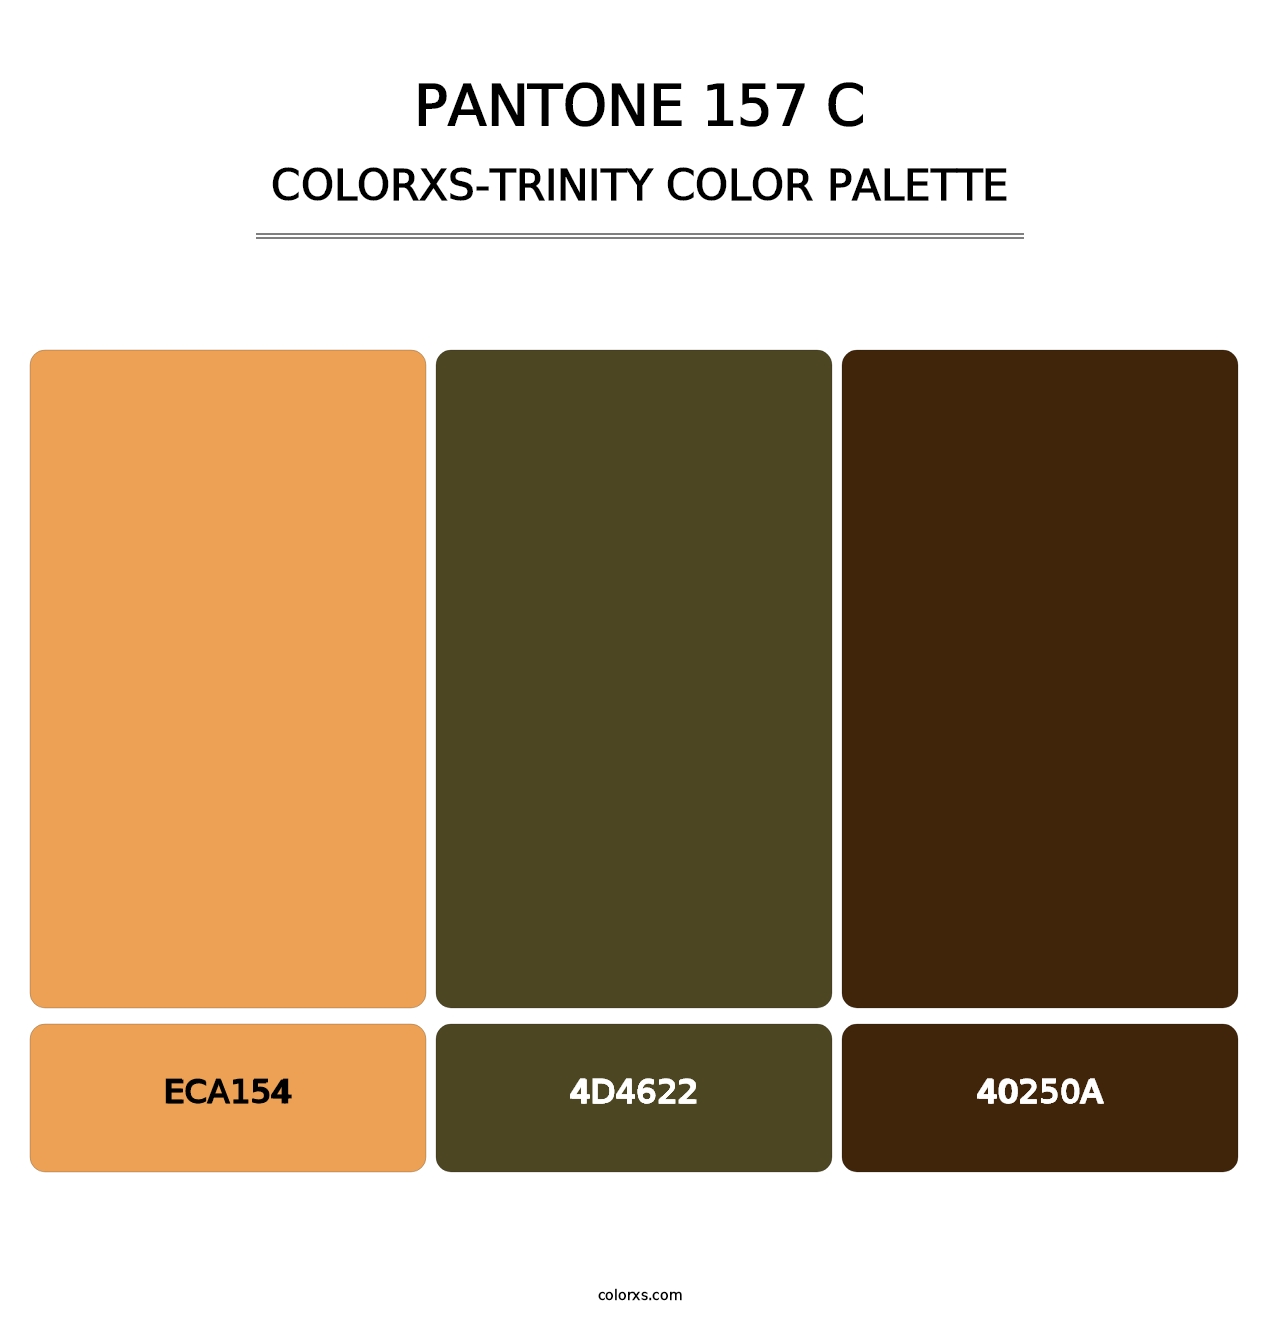 PANTONE 157 C - Colorxs Trinity Palette